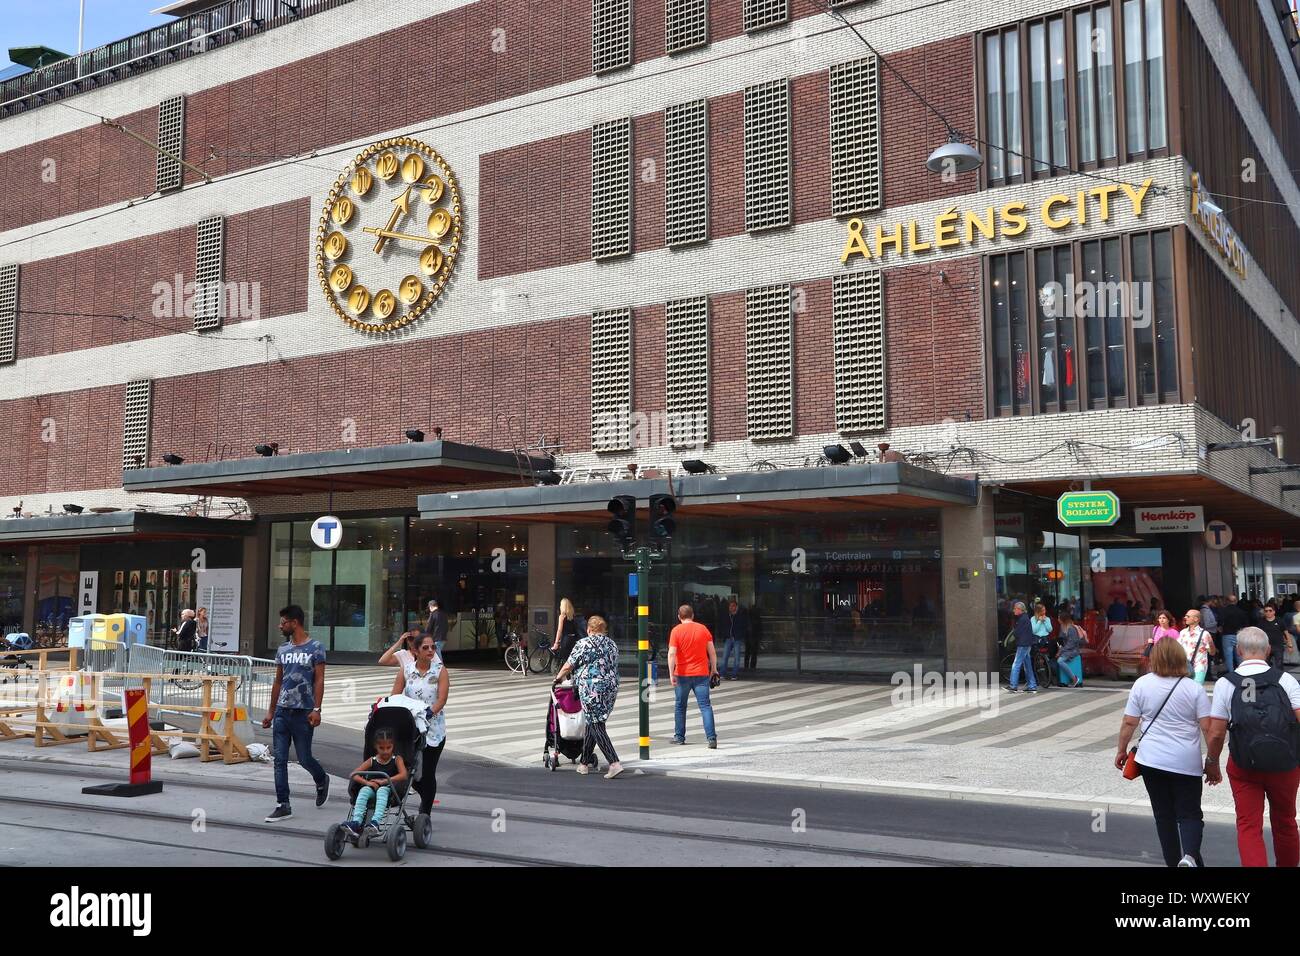 STOCKHOLM, SWEDEN - AUGUST 23, 2018: People walk by Ahlens City department store in Drottninggatan street, Stockholm. Drottninggatan is one of most re Stock Photo